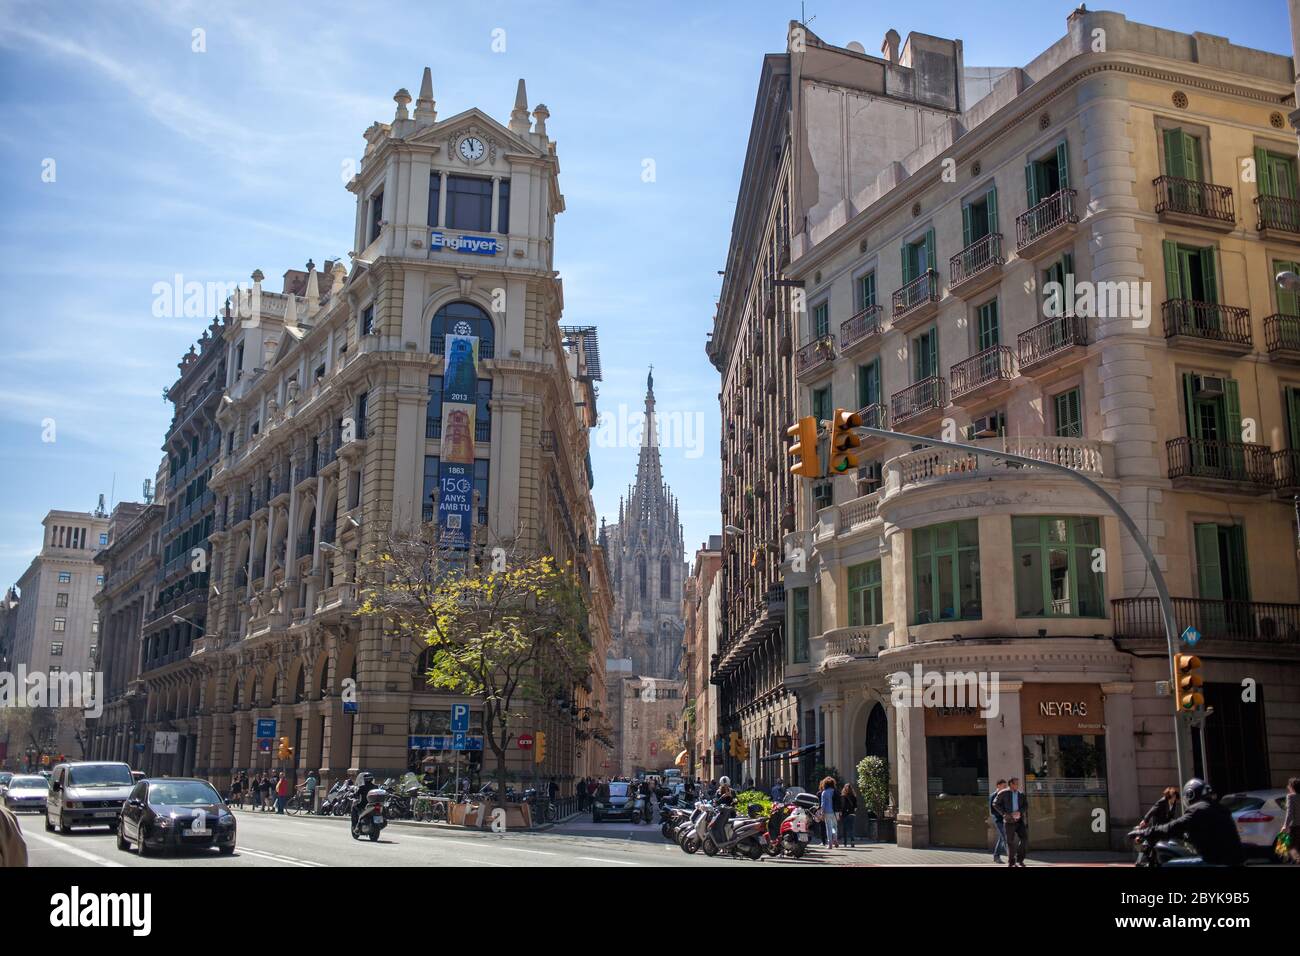 Barcelona, Spain - 17 april 2013: Photo of famous Via Laietana street in the center of Barcelona. Stock Photo